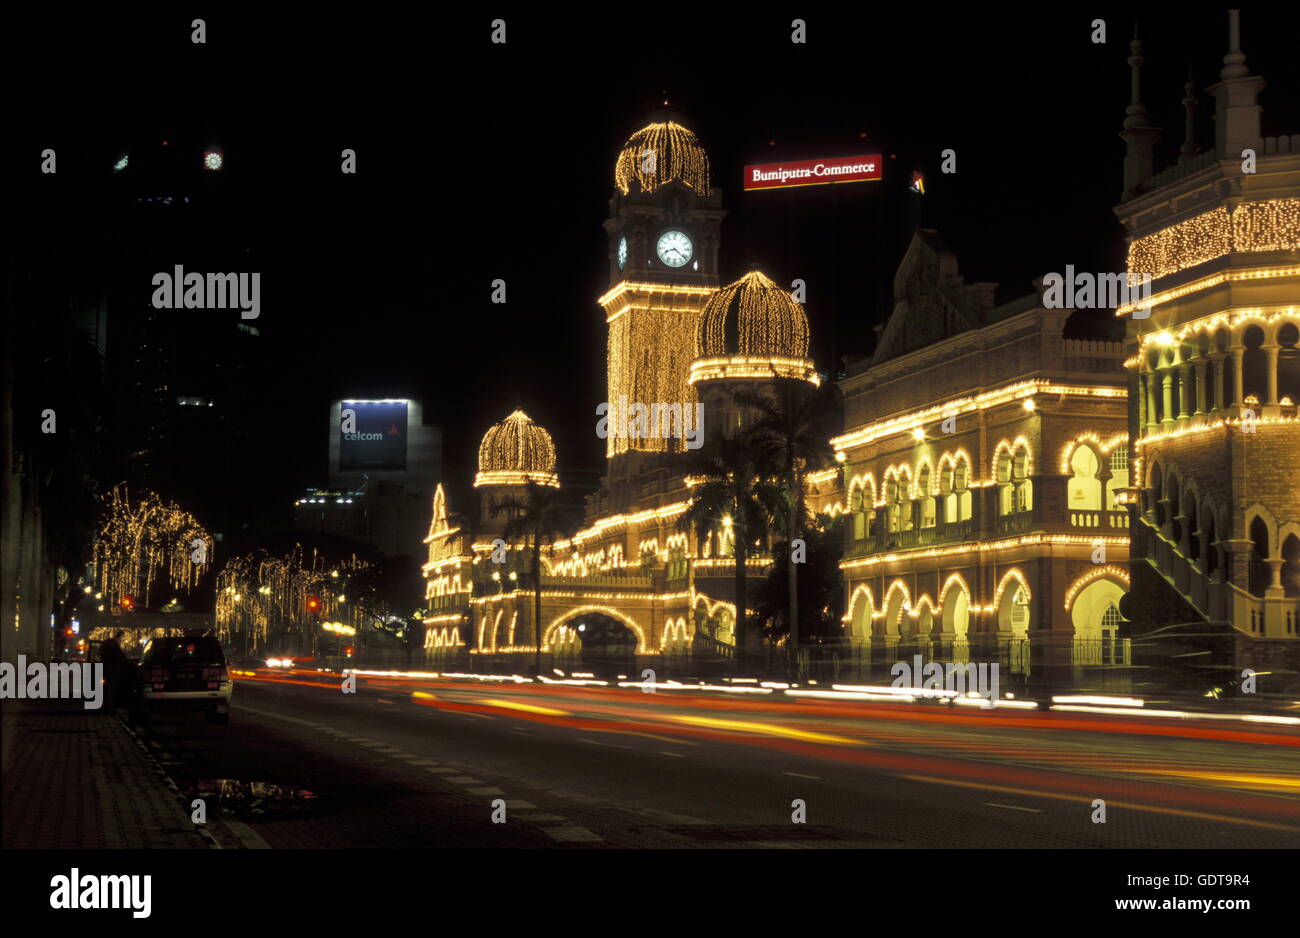 El Sultán Abdul Samad Palace en la Plaza Merdeka en la ciudad de Kuala Lumpur, en Malasia en southeastasia. Foto de stock